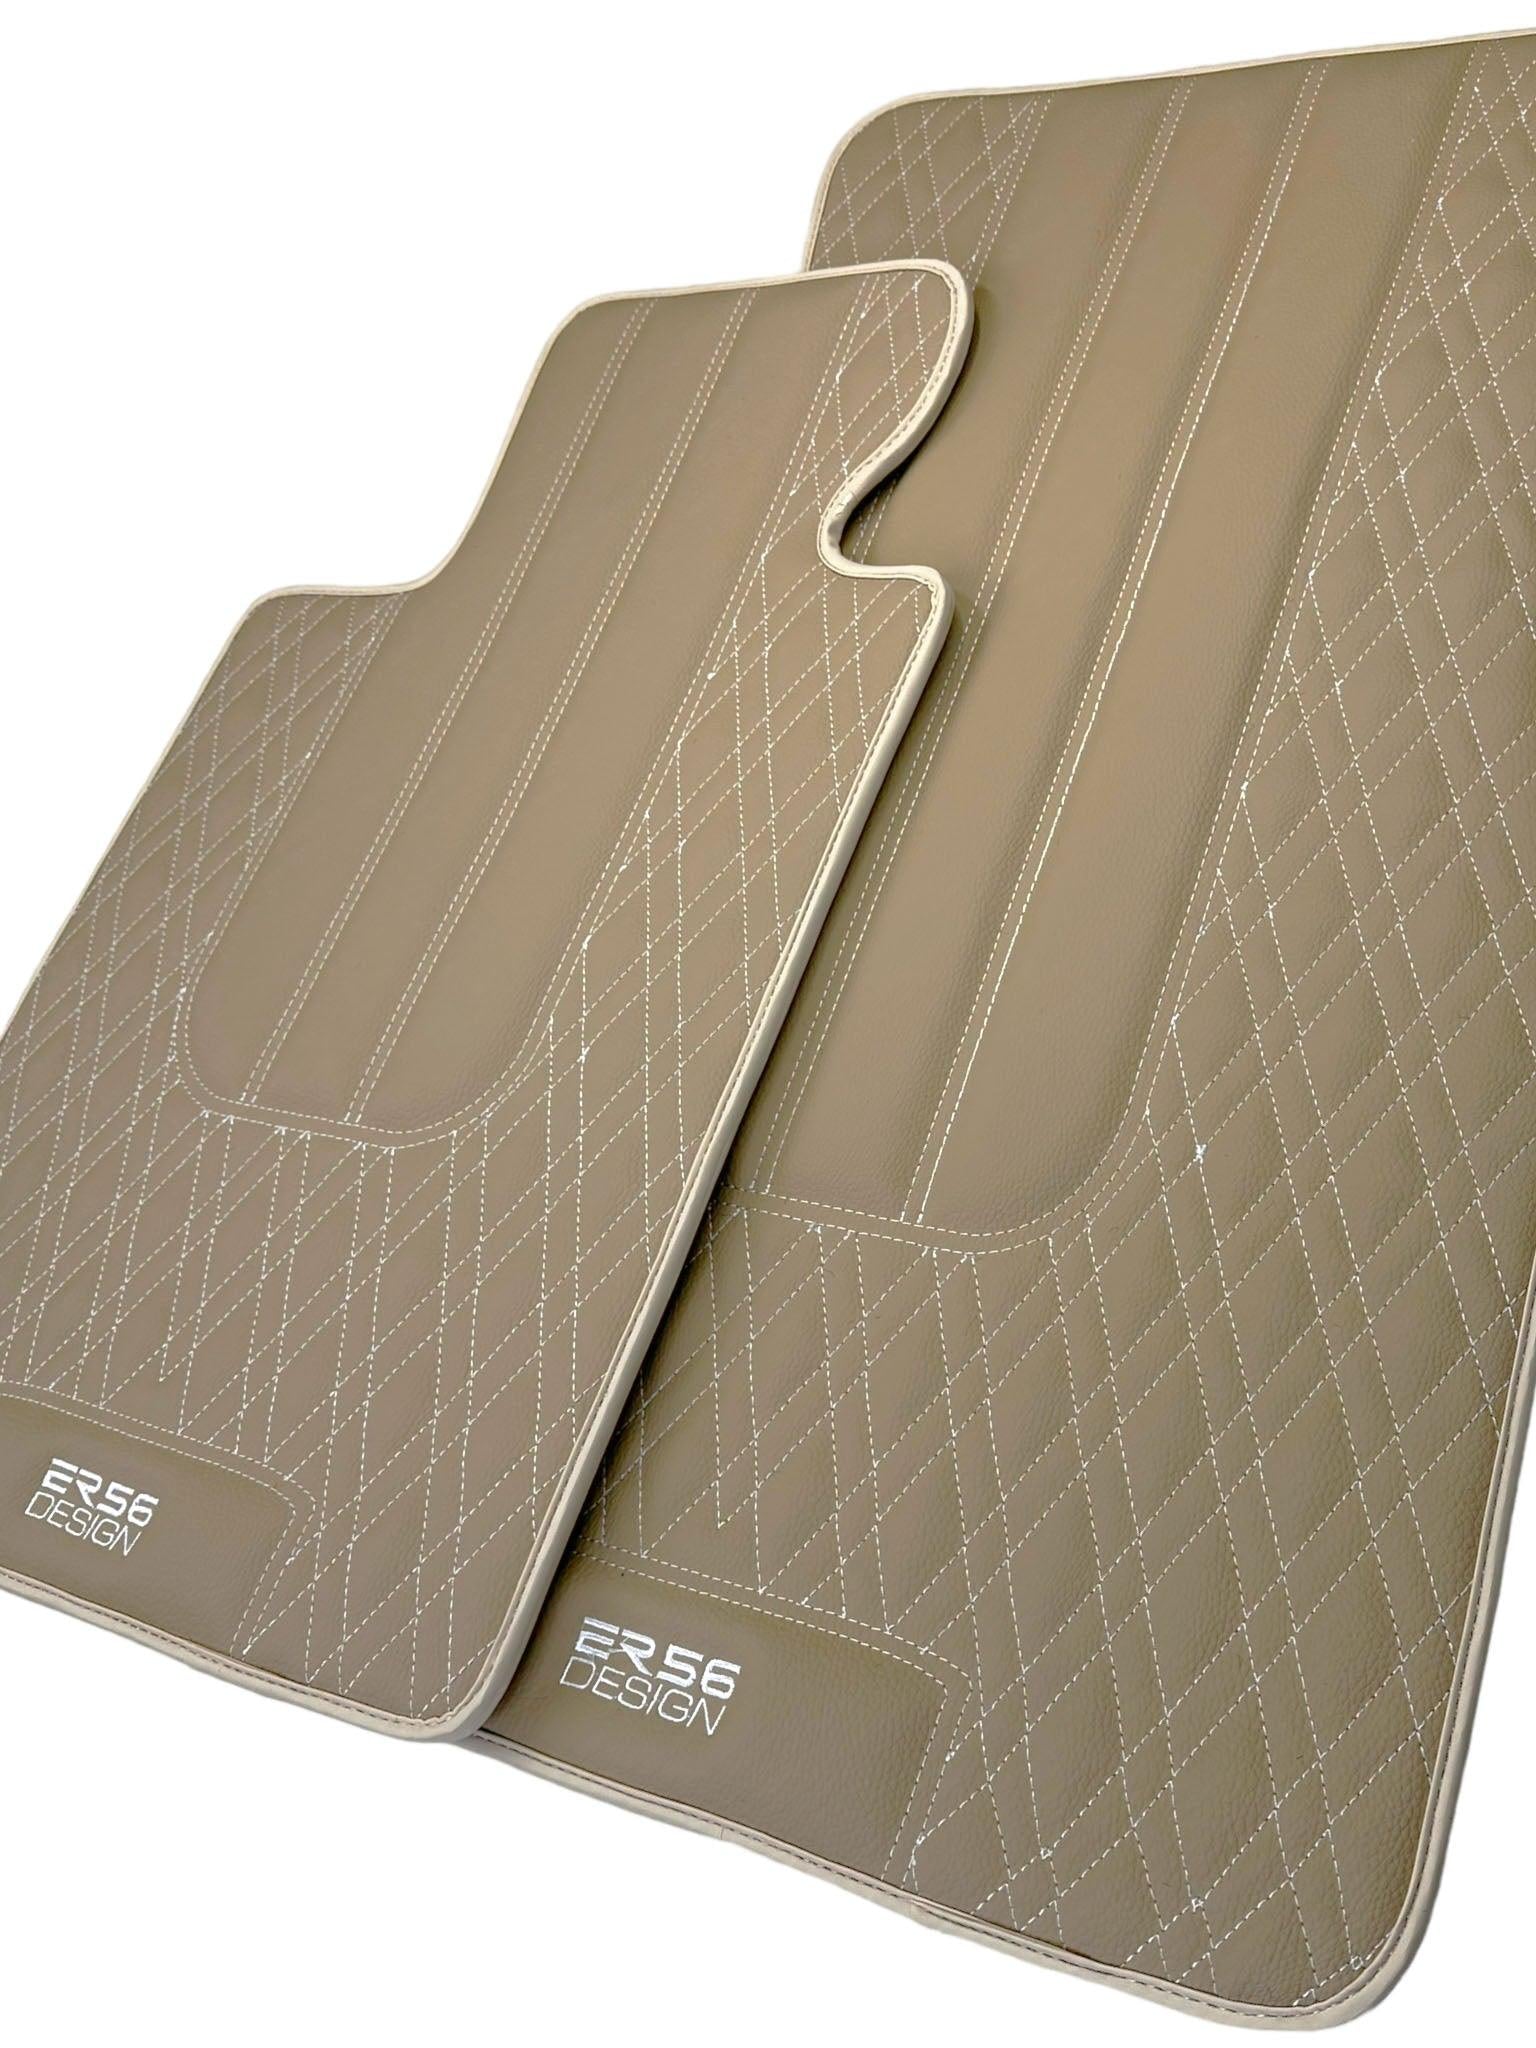 Beige Leather Floor Floor Mats For BMW 1 Series F40 | Fighter Jet Edition Autowin Brand |Sky Blue Trim